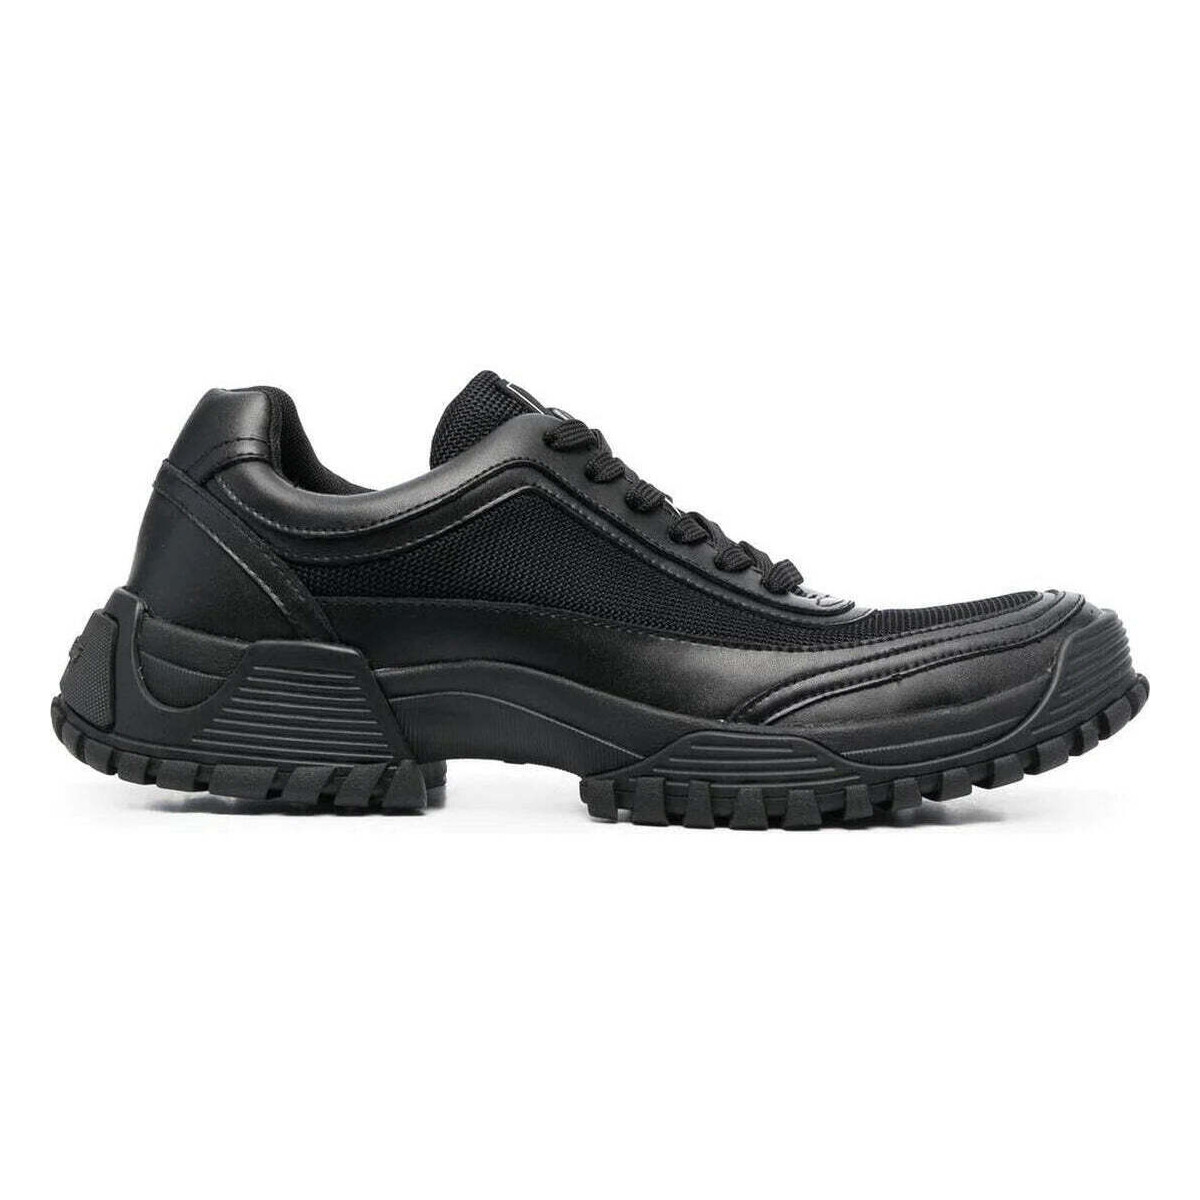 Chaussures Homme Baskets basses Emporio Armani black casual sneaker Noir